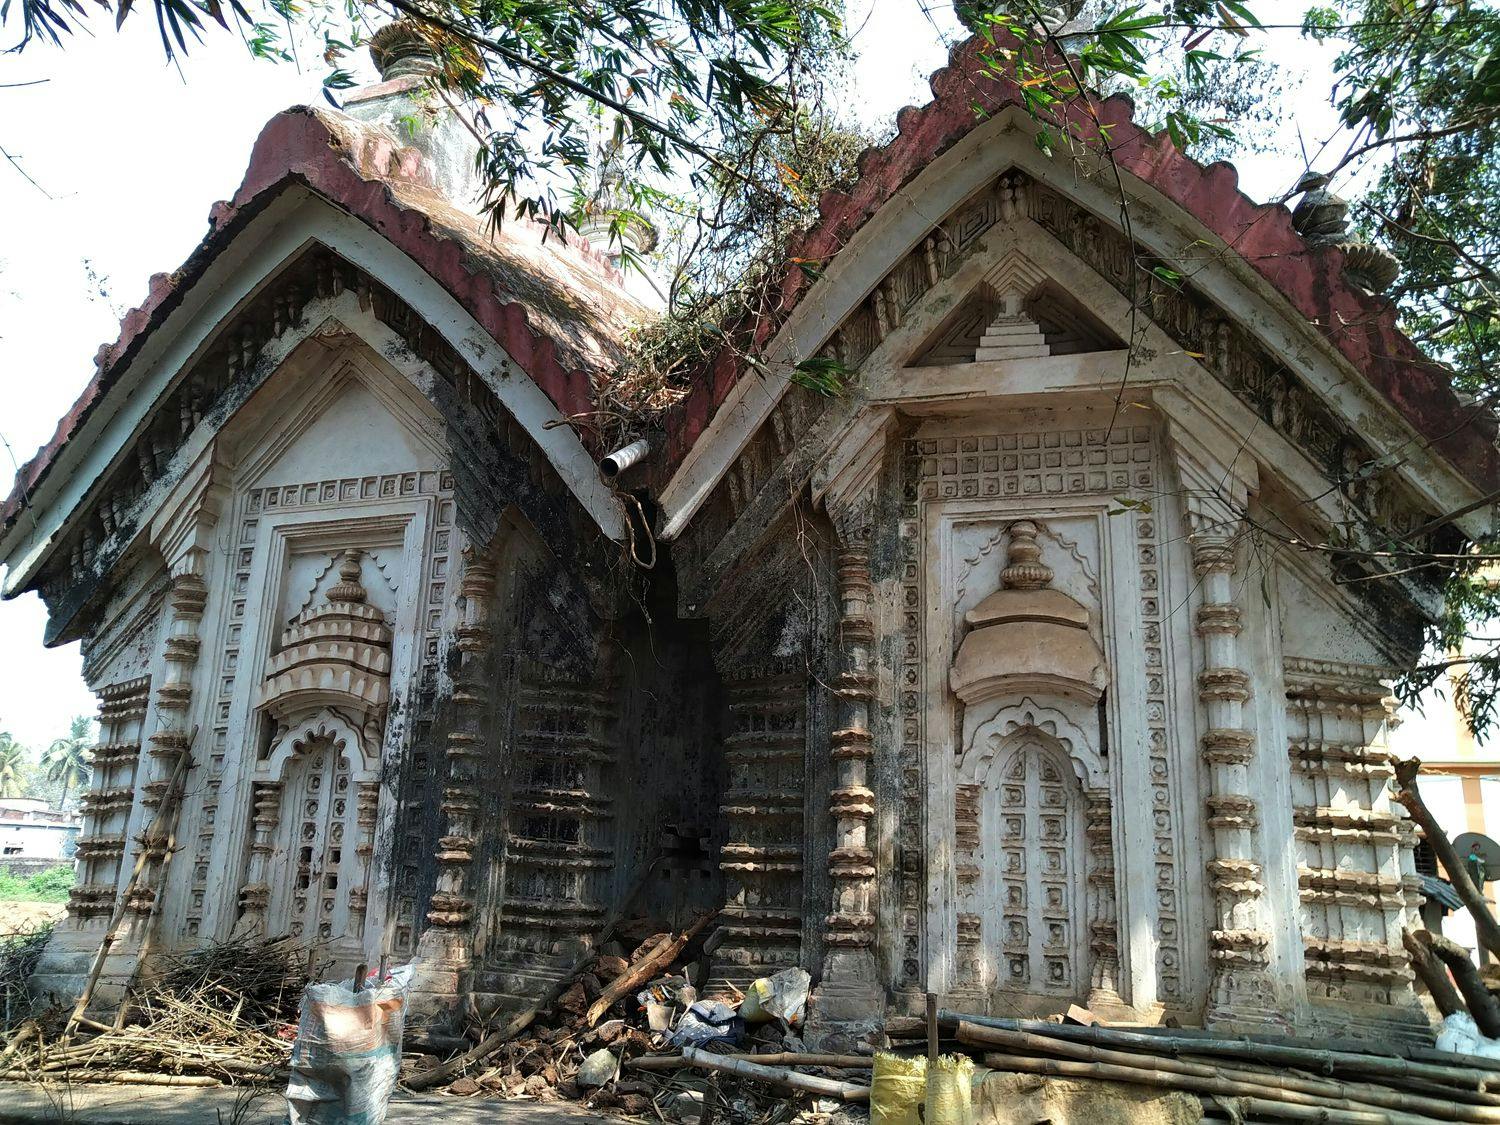 Jor Bangla style temple, sideview